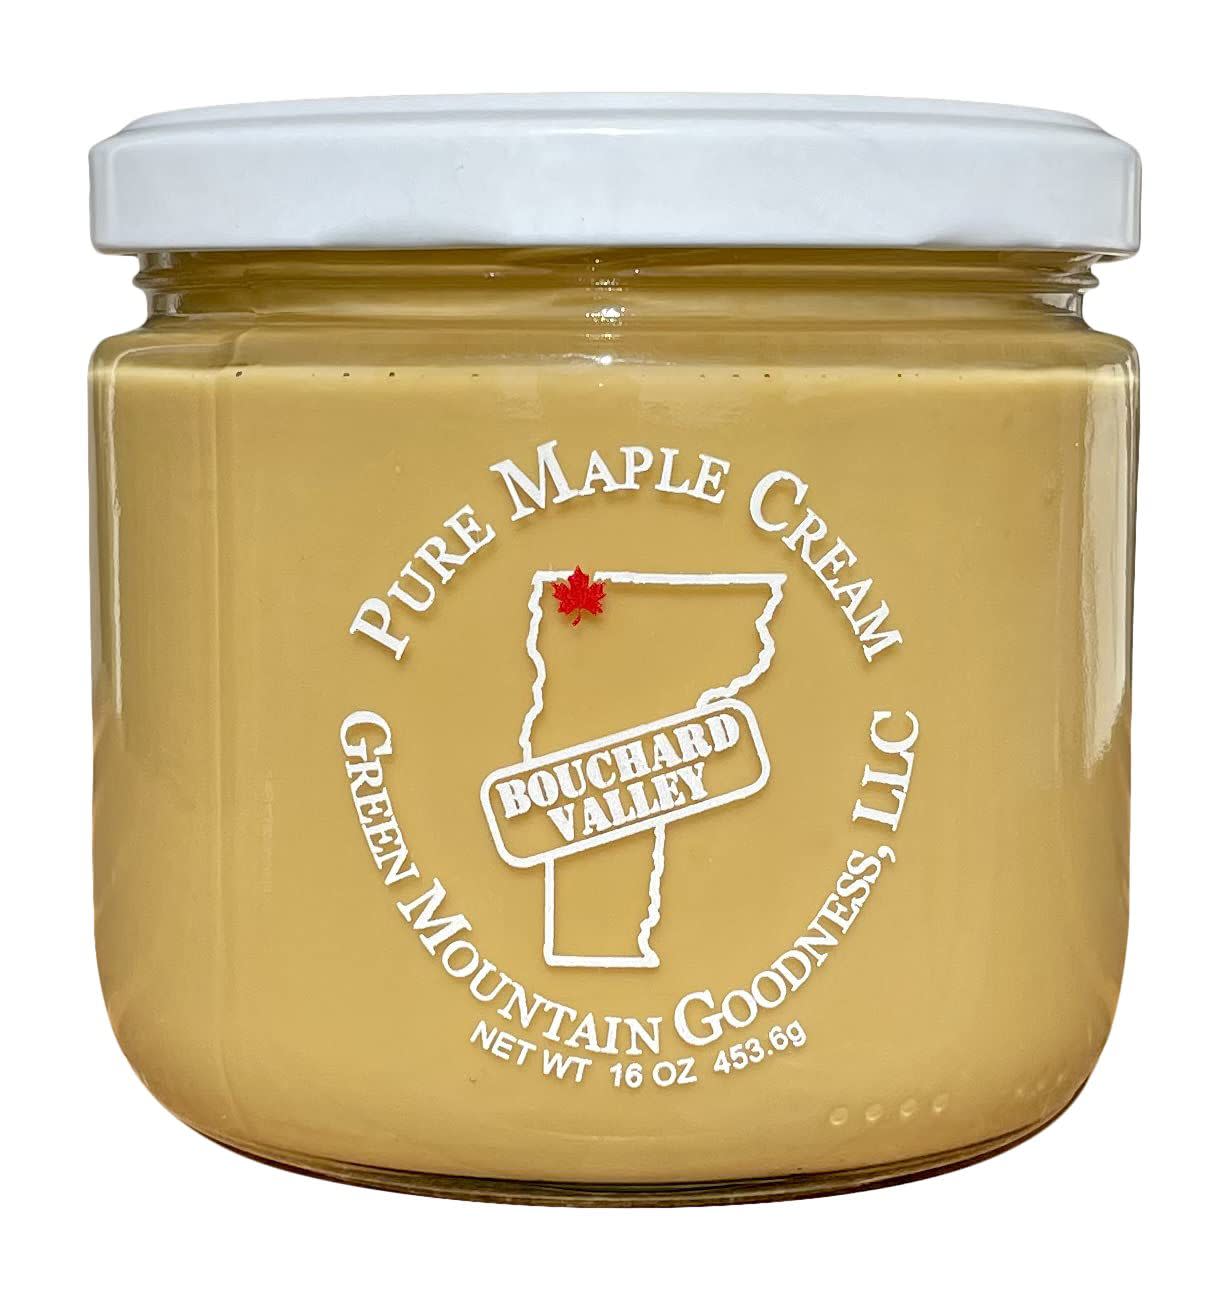 Green Mountain Goodness Pure Vermont Maple Cream